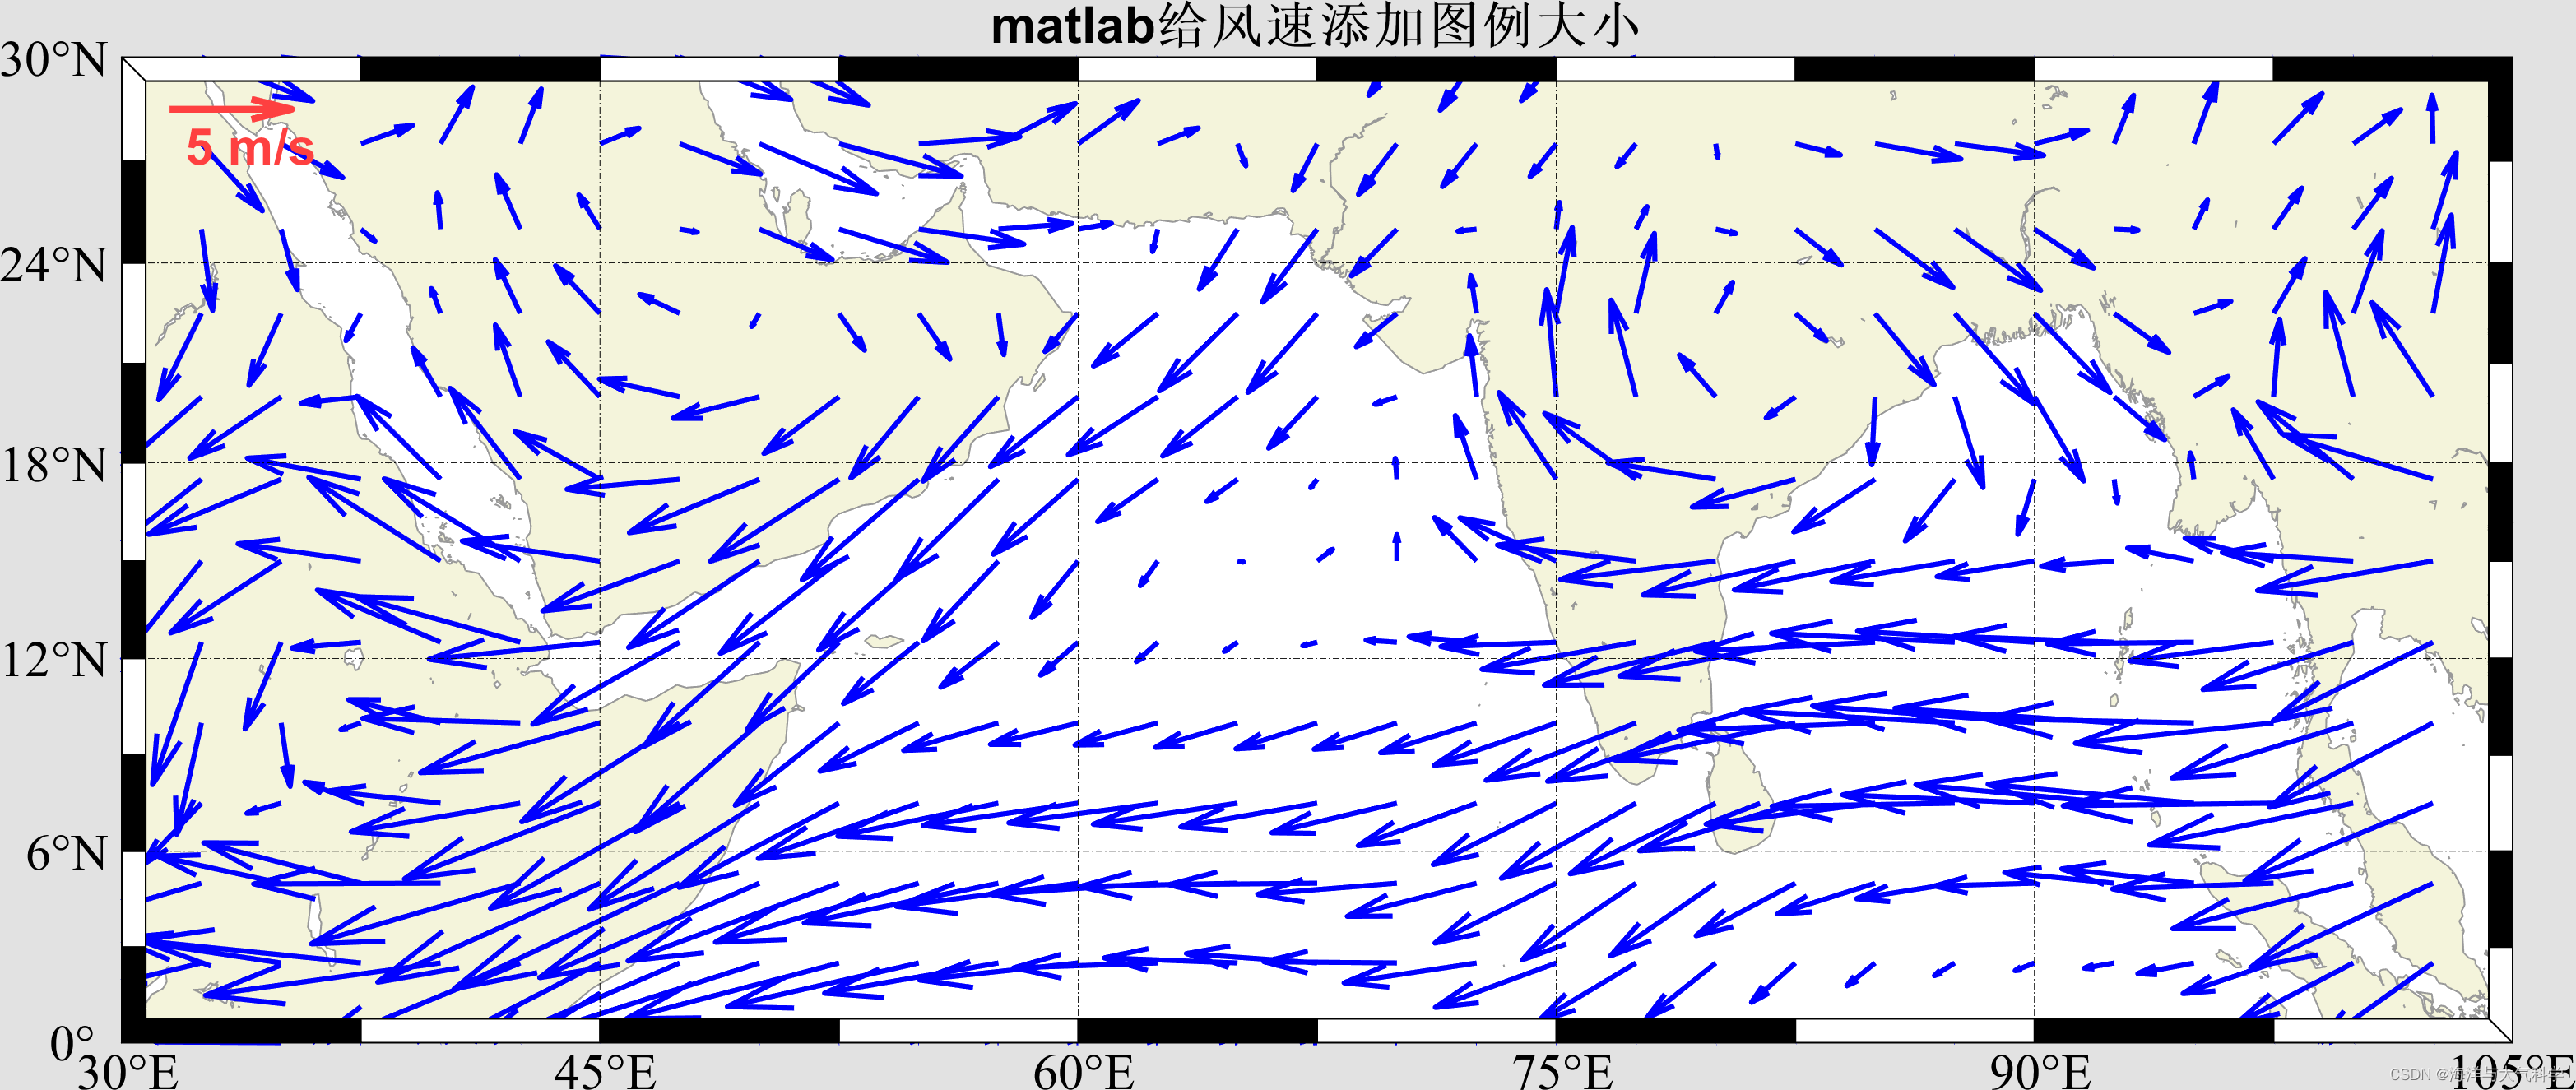 【matlab程序】matlab给风速添加图例大小